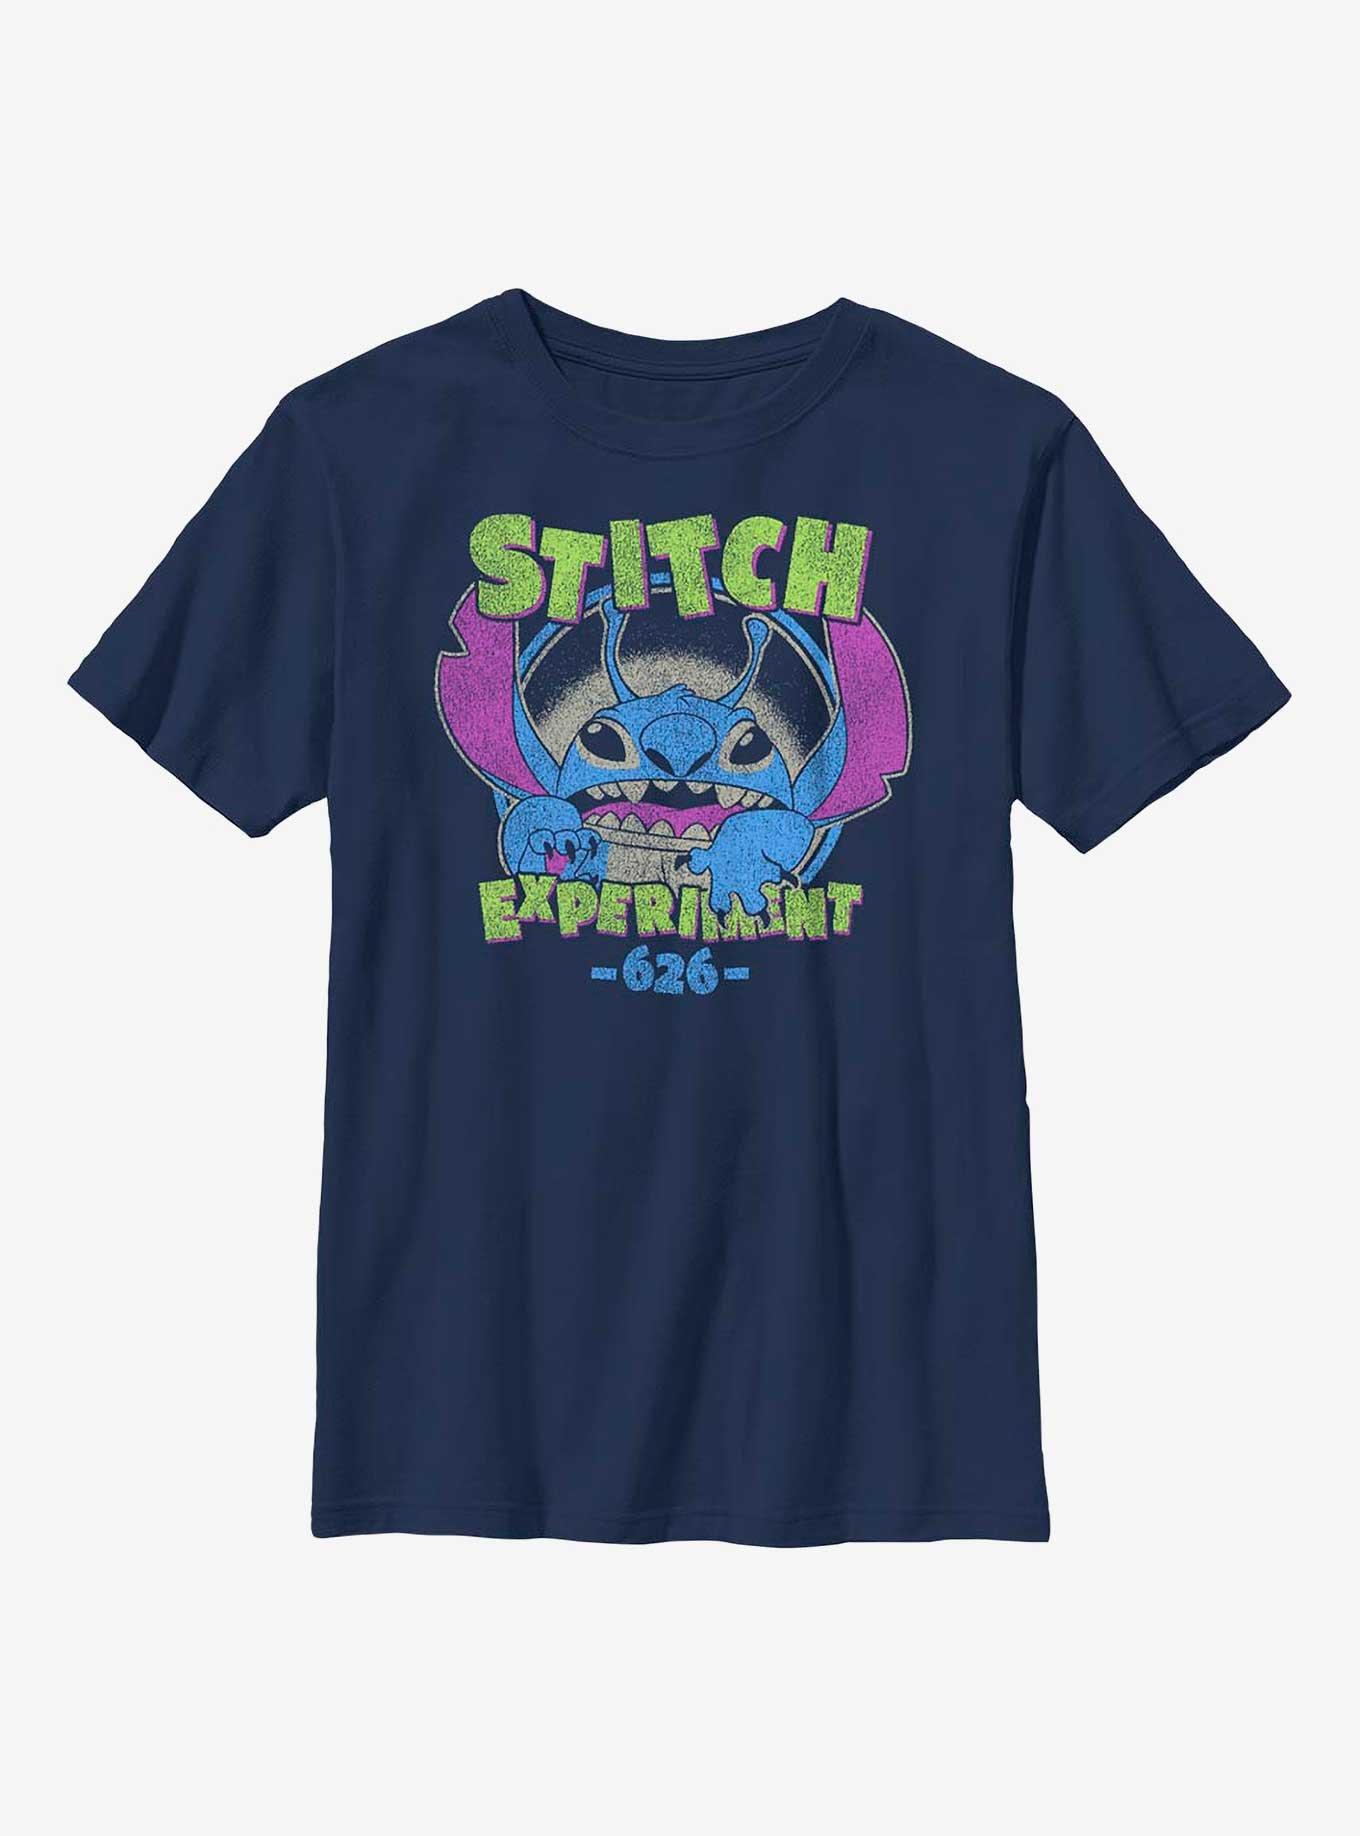 Disney Lilo & Stitch Alien Mode Youth T-Shirt, , hi-res